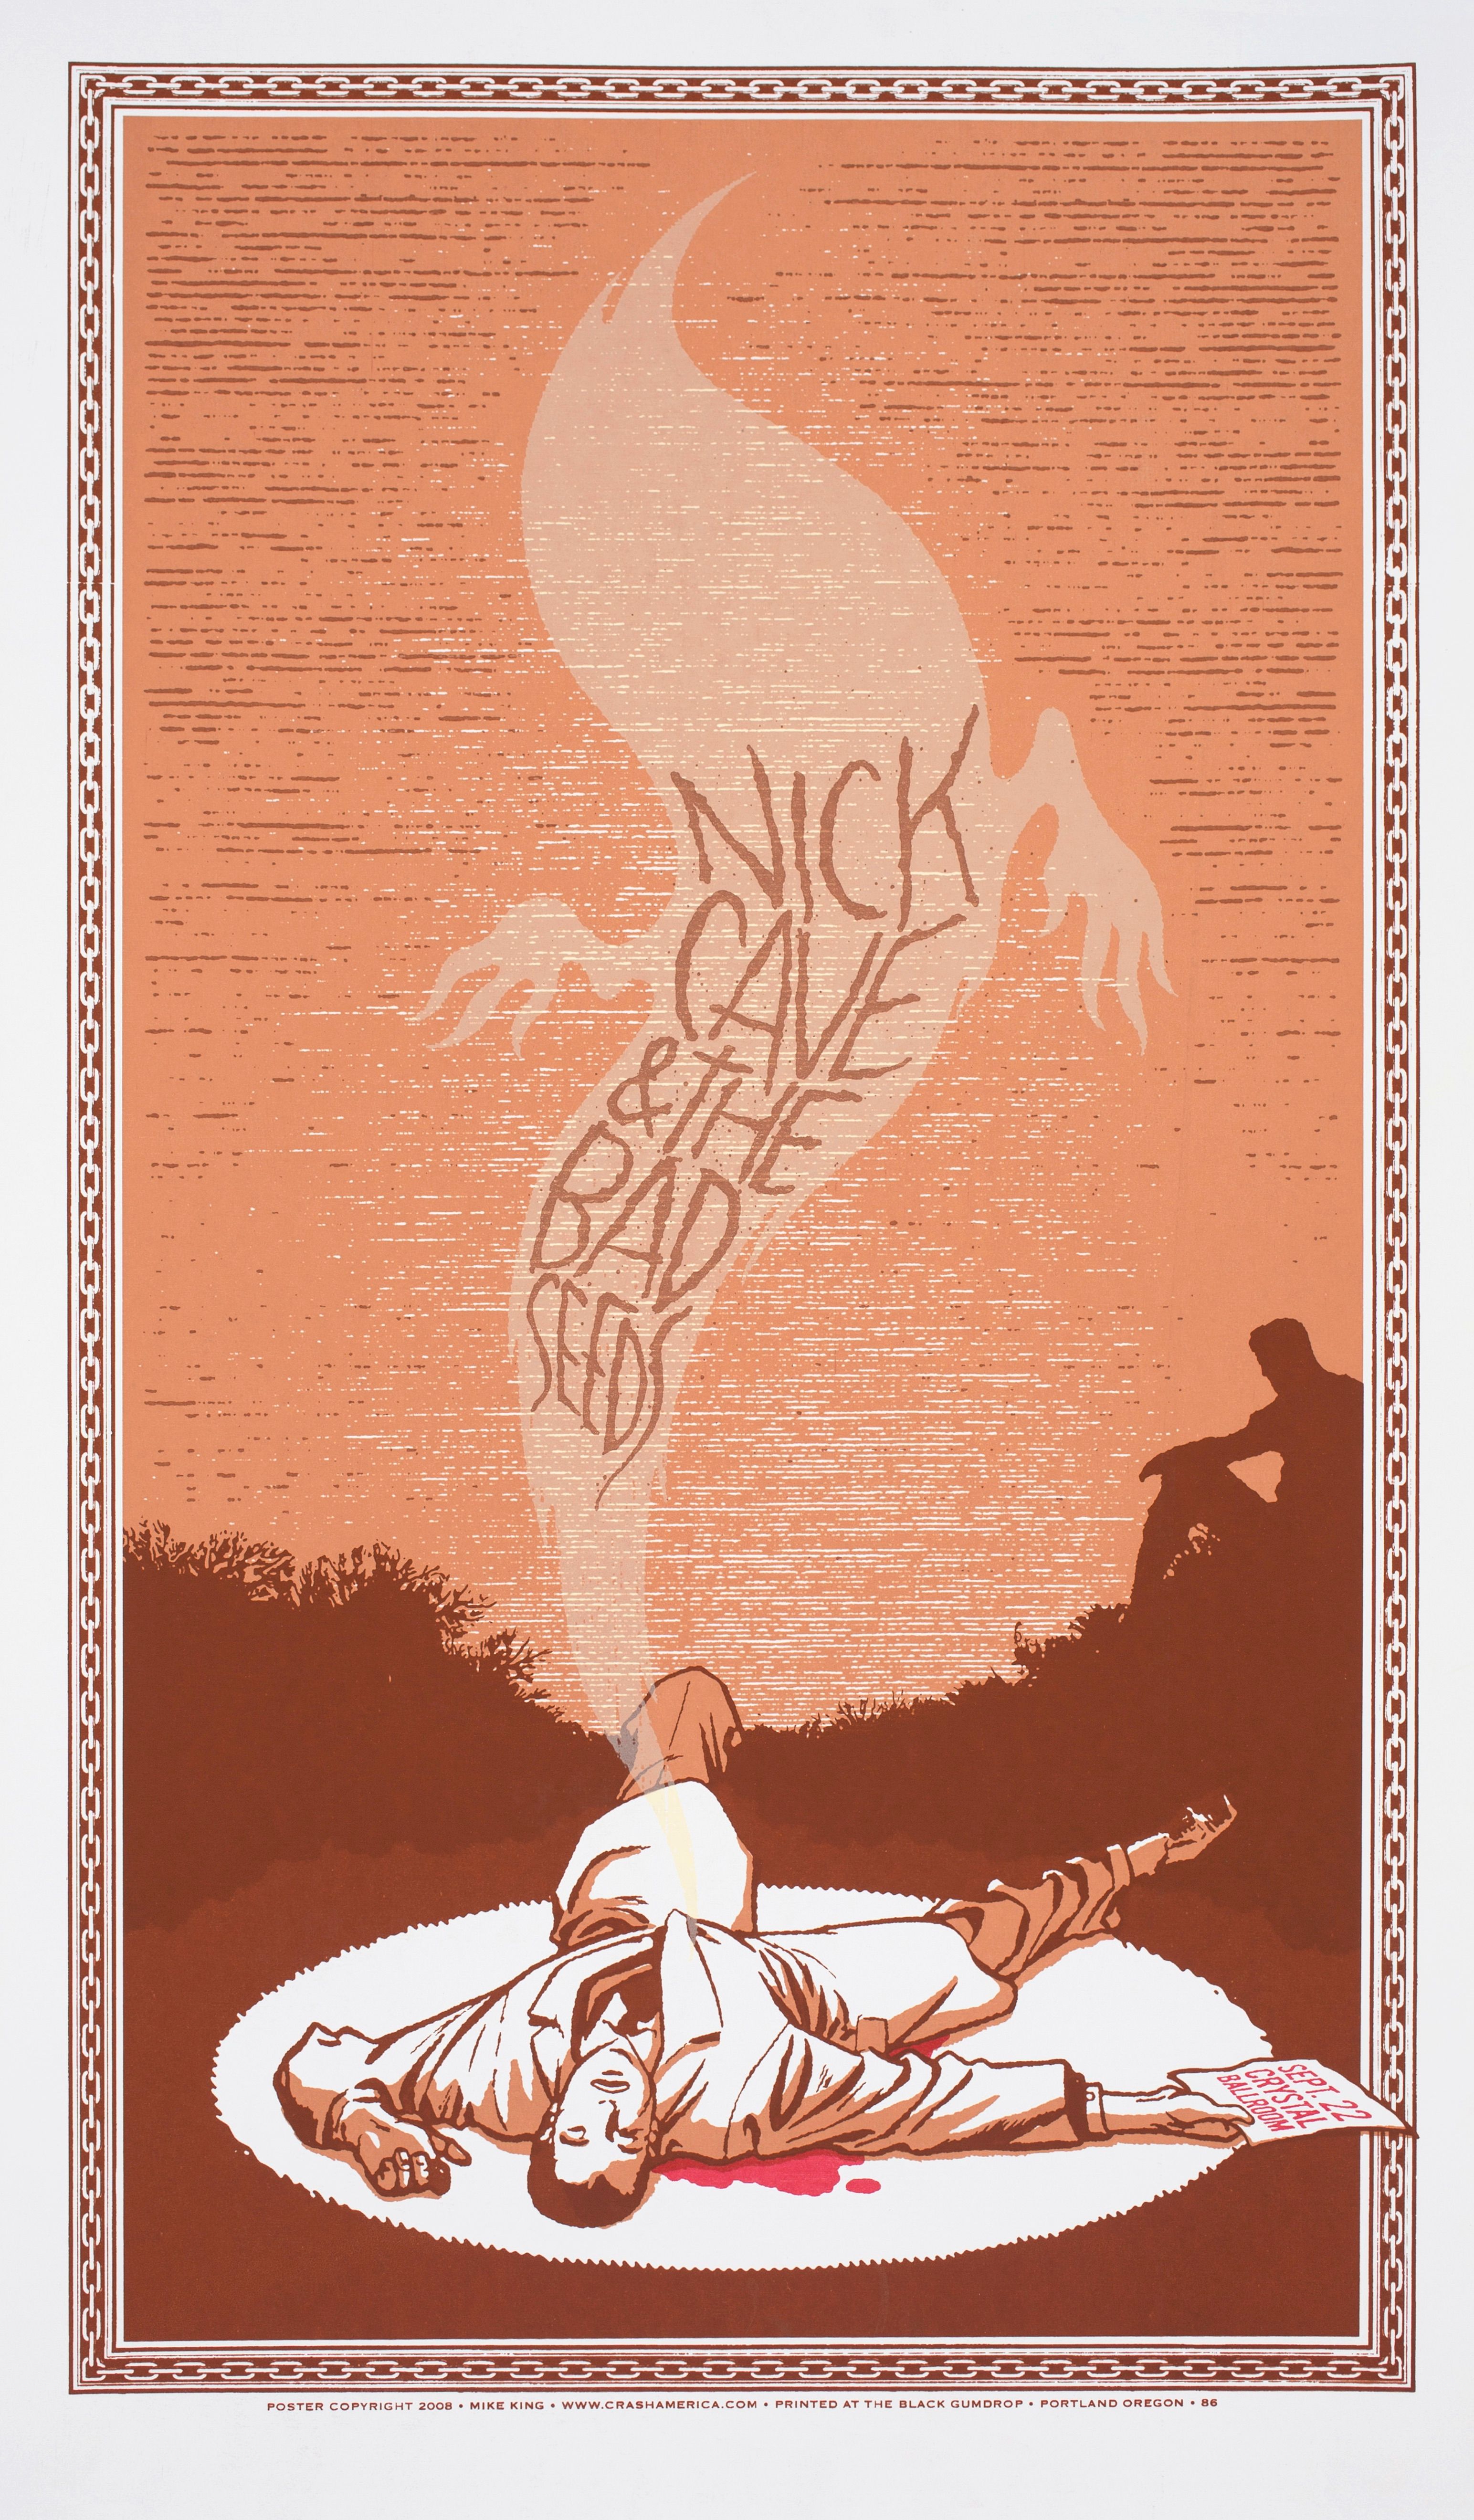 MXP-230.1 Nick Cave & The Bad Seeds 2008 Crystal Ballroom  Sep 22 Concert Poster